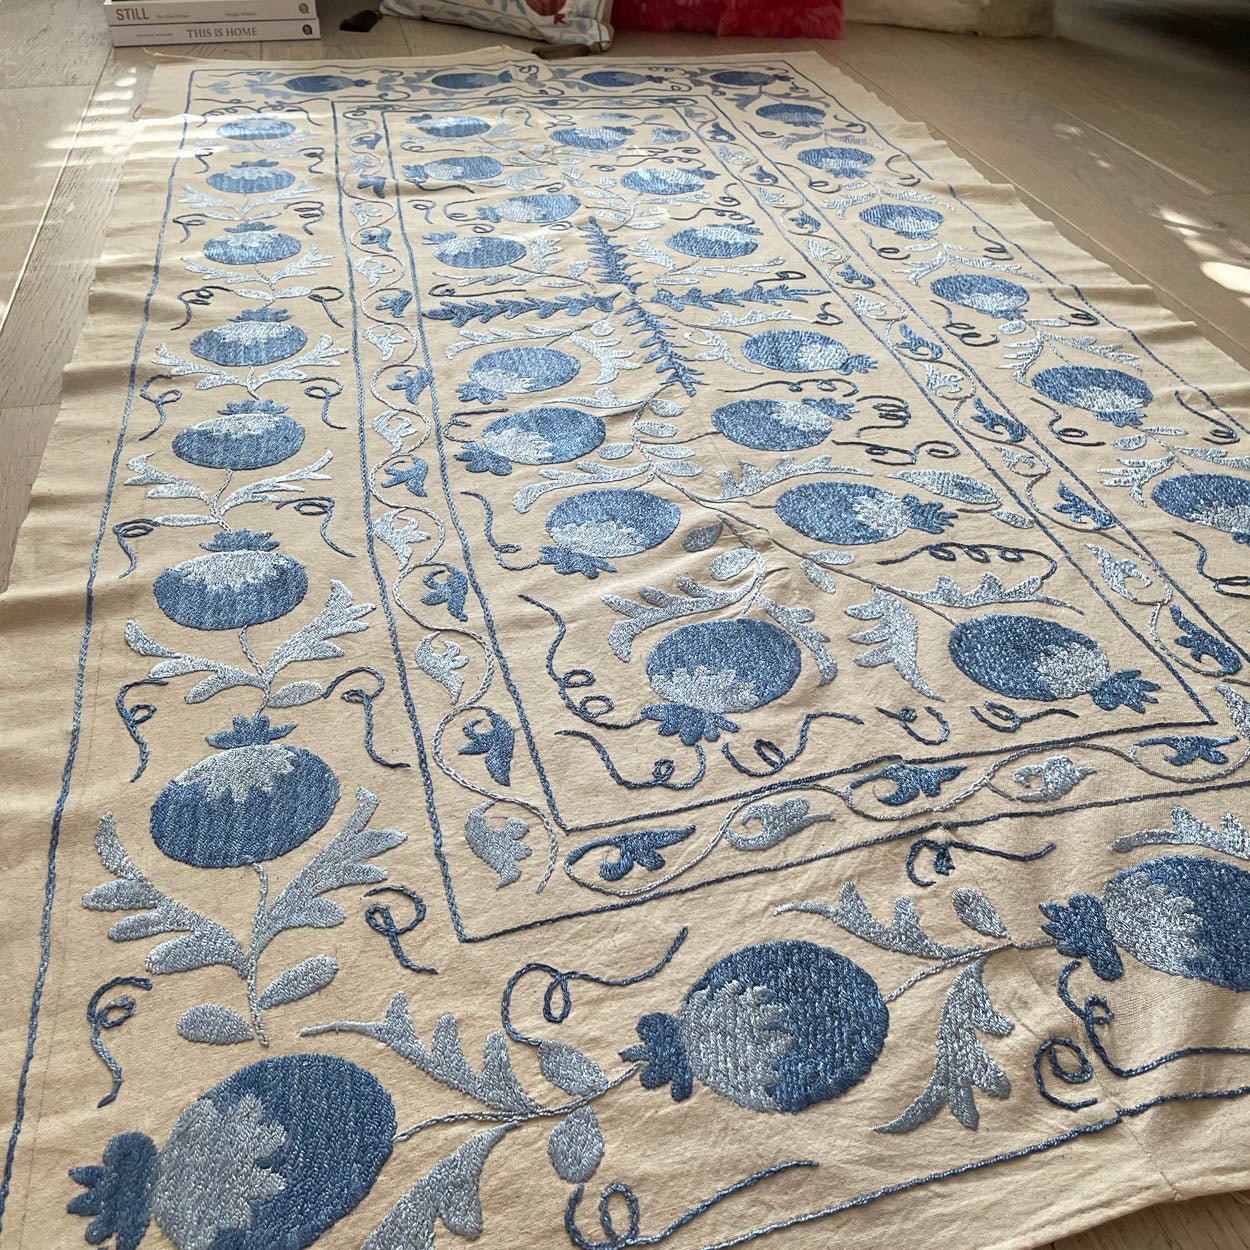 Uzbeki Suzani Hand Embroidered Textile Wall Hanging | Home Décor | Runner | 95cm x 180cm SUZ220518008 - Wildash London